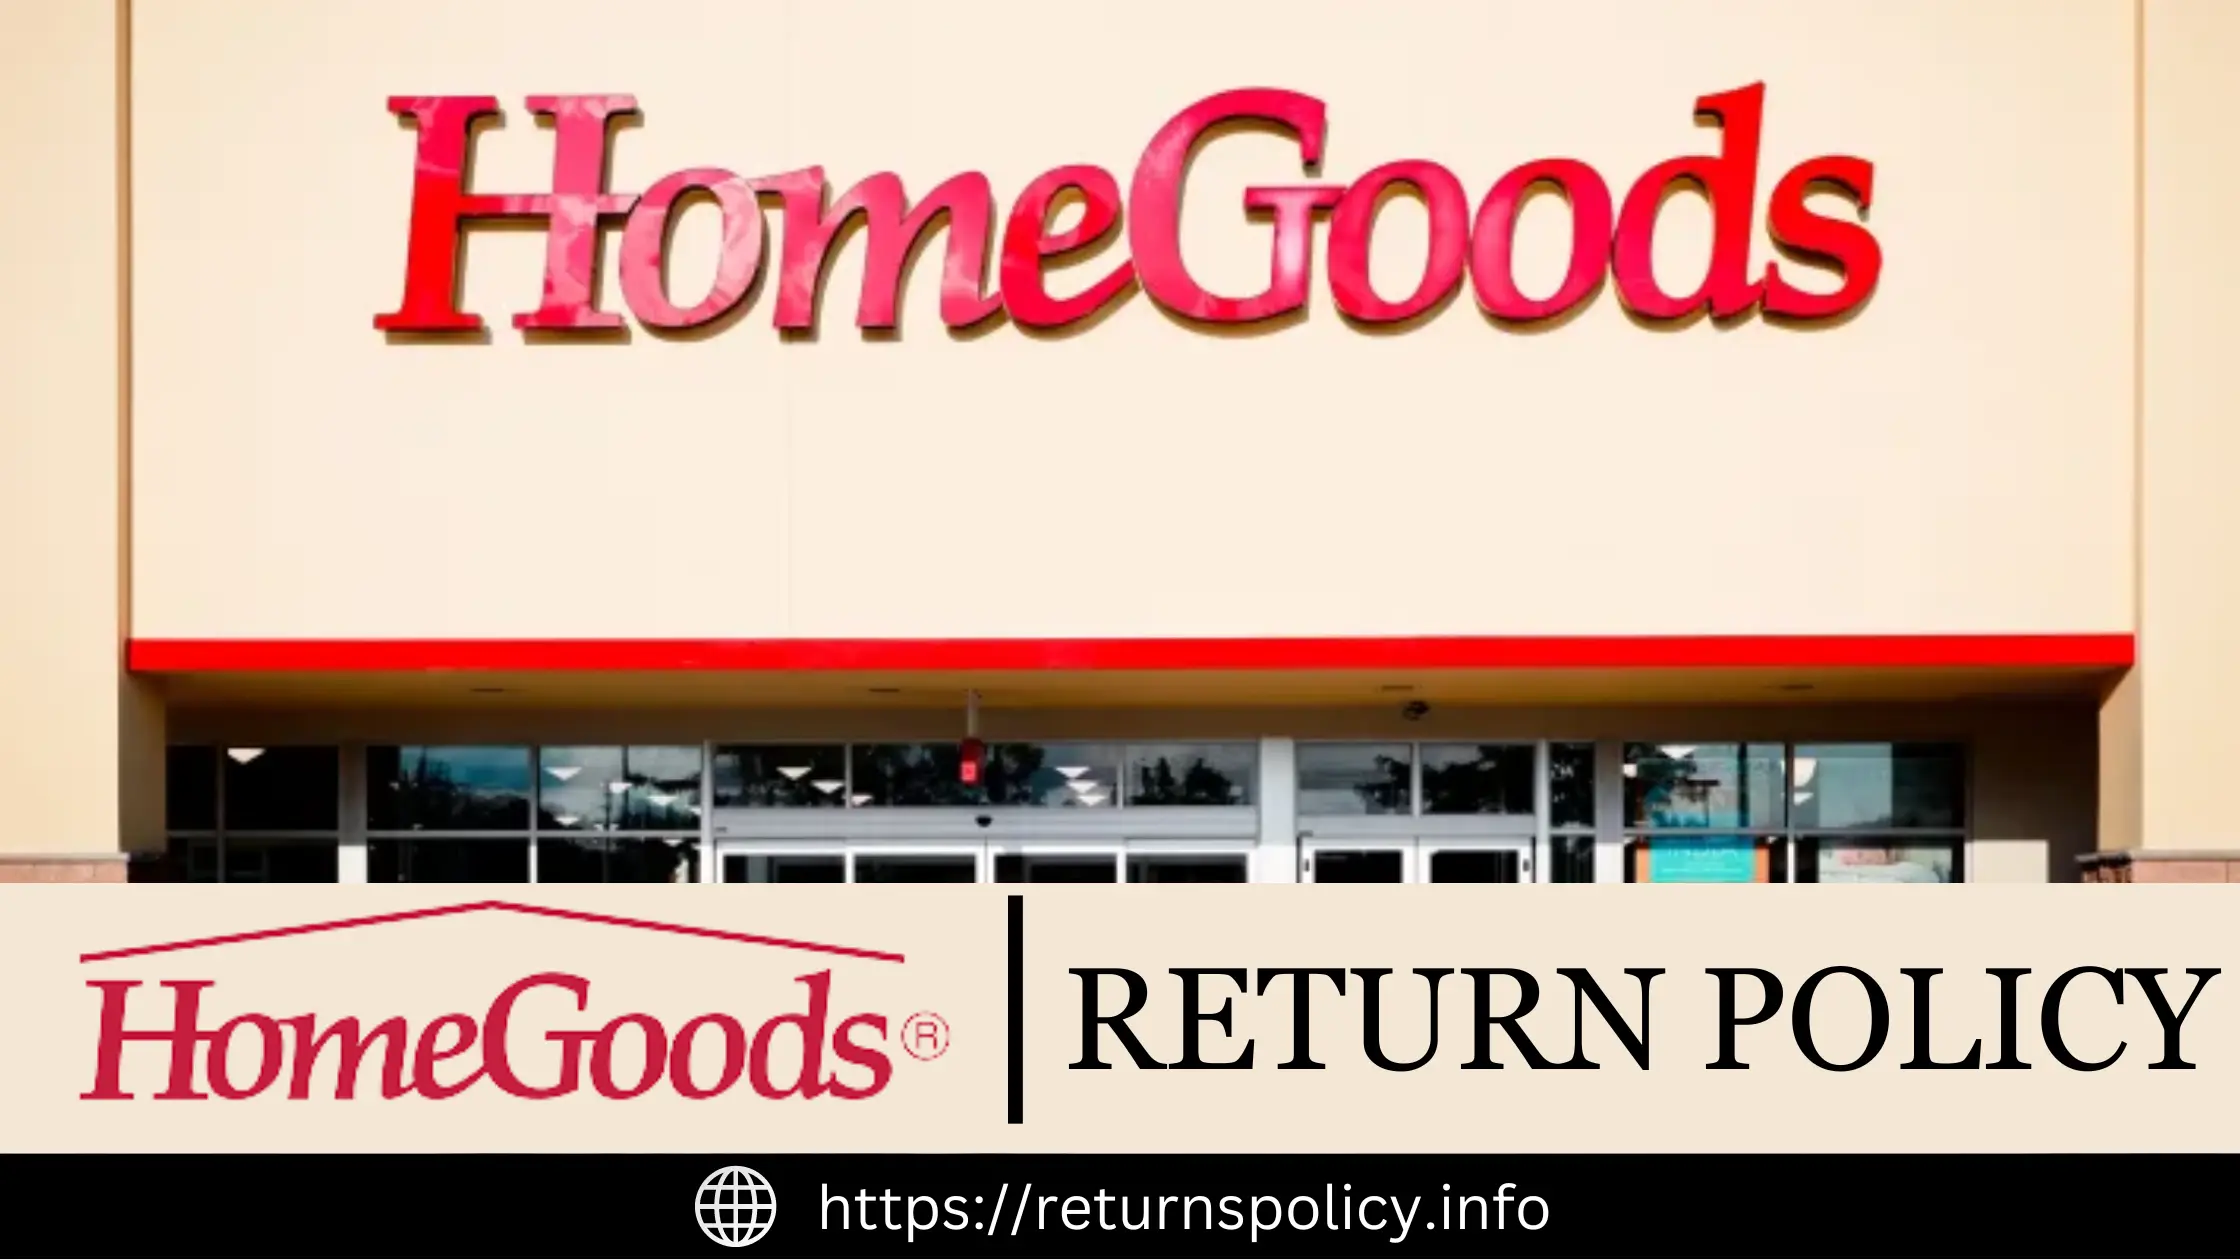 HomeGoods Return Policy